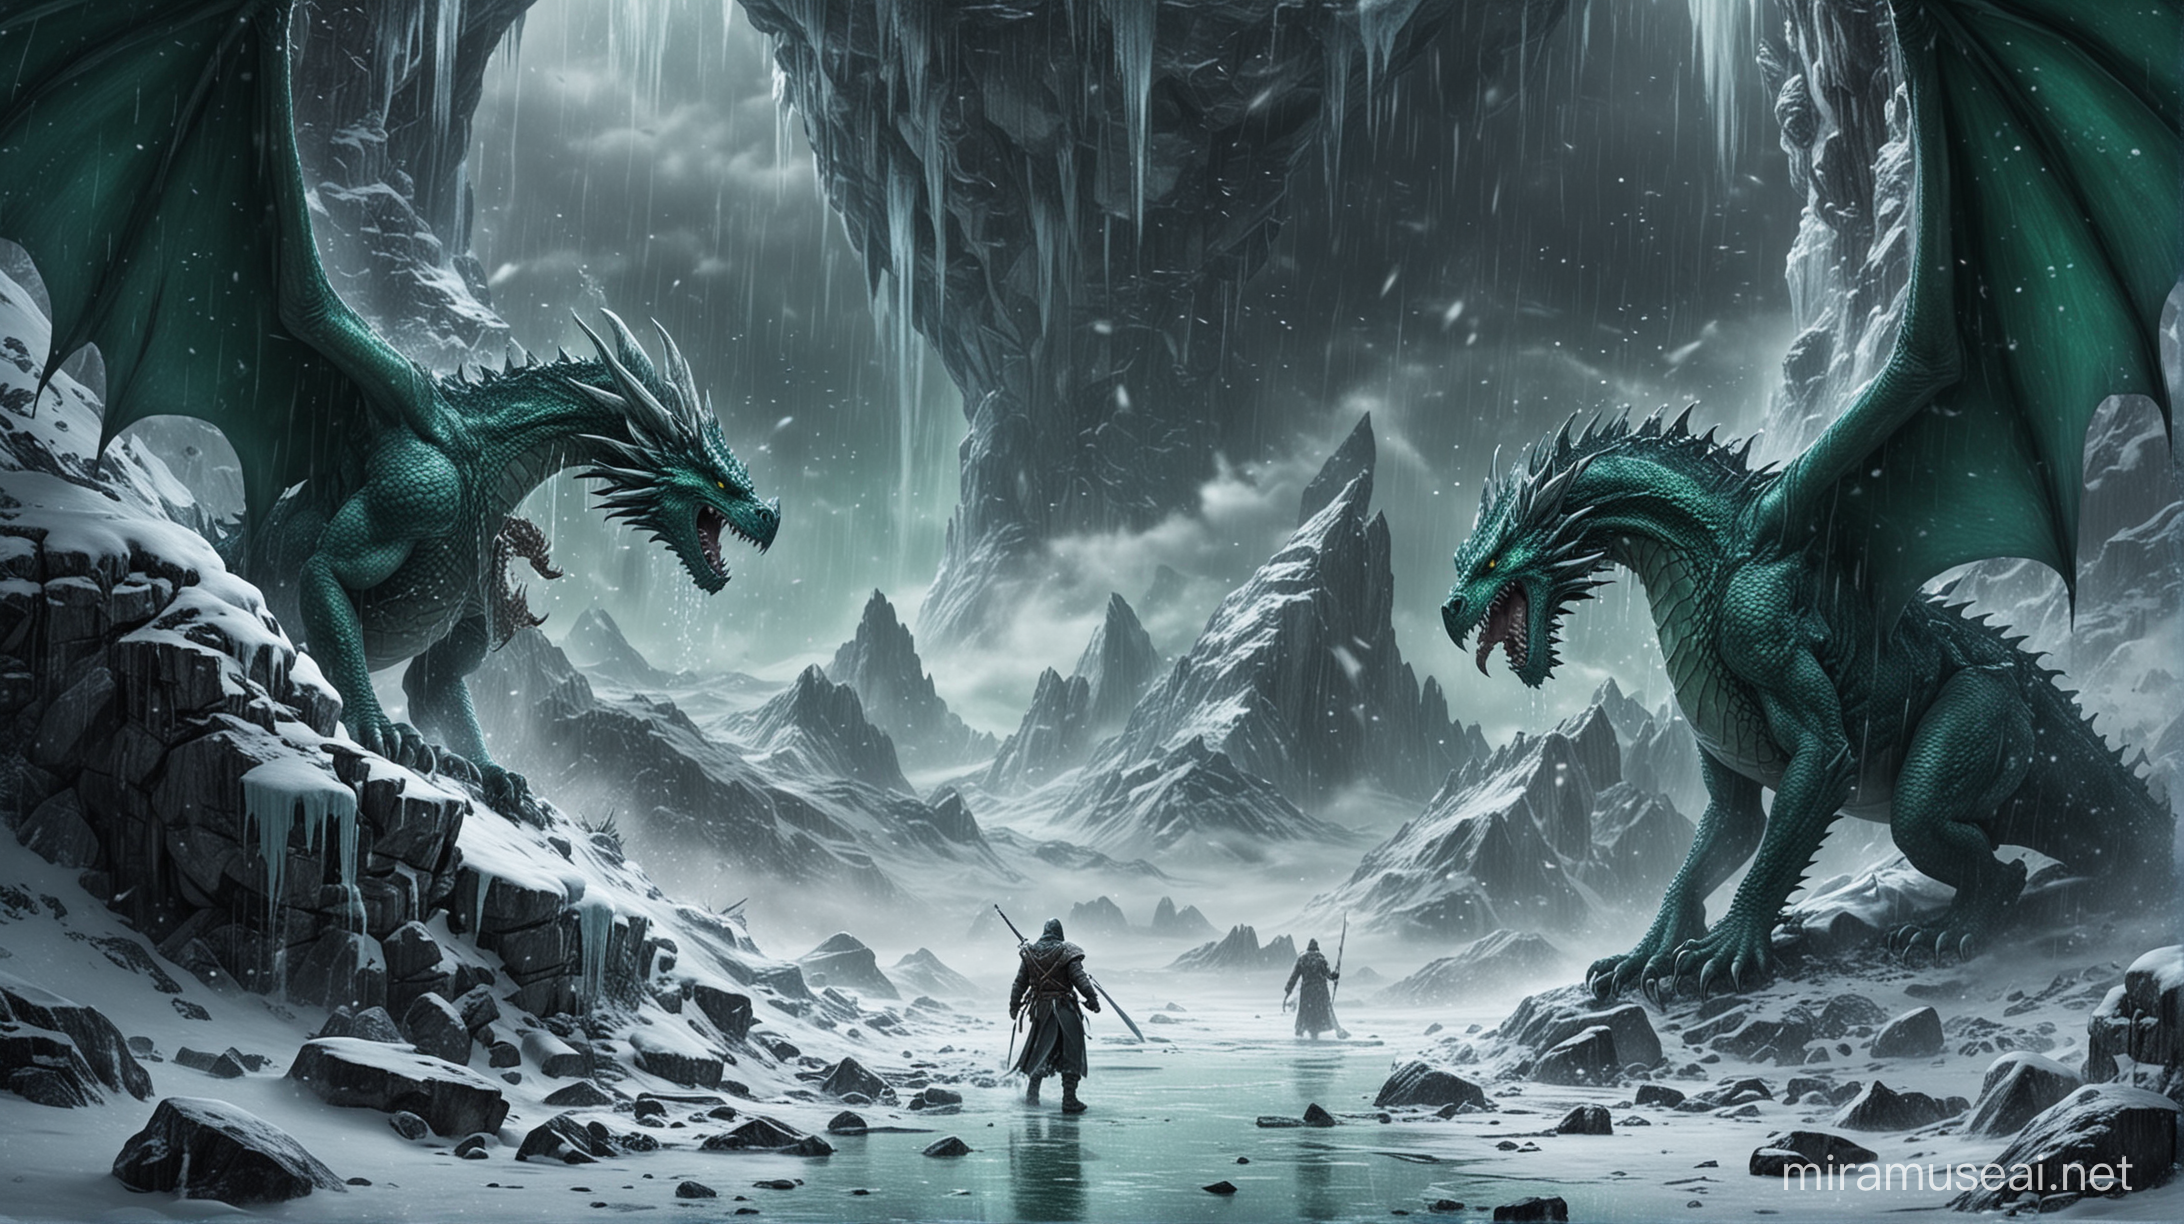 Epic Dragon Battle atop Frozen Mountain with Spooky Entrance